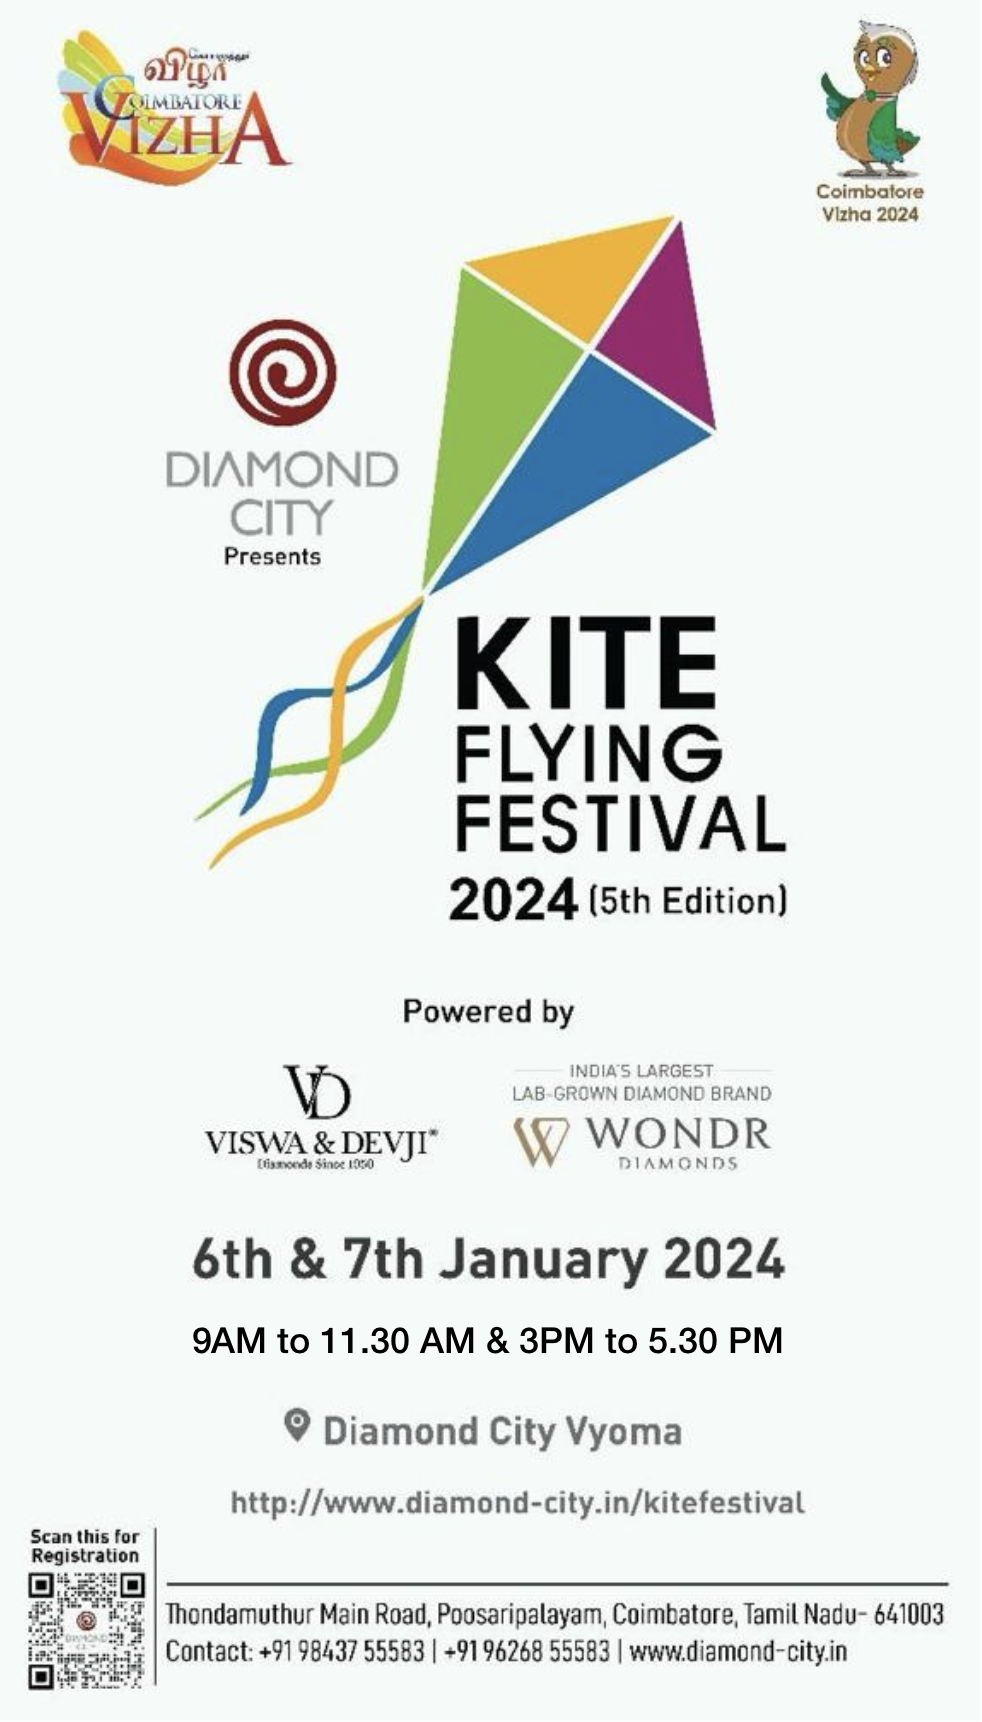 KITE FLYING FESTIVAL 2024 (5th Edition)